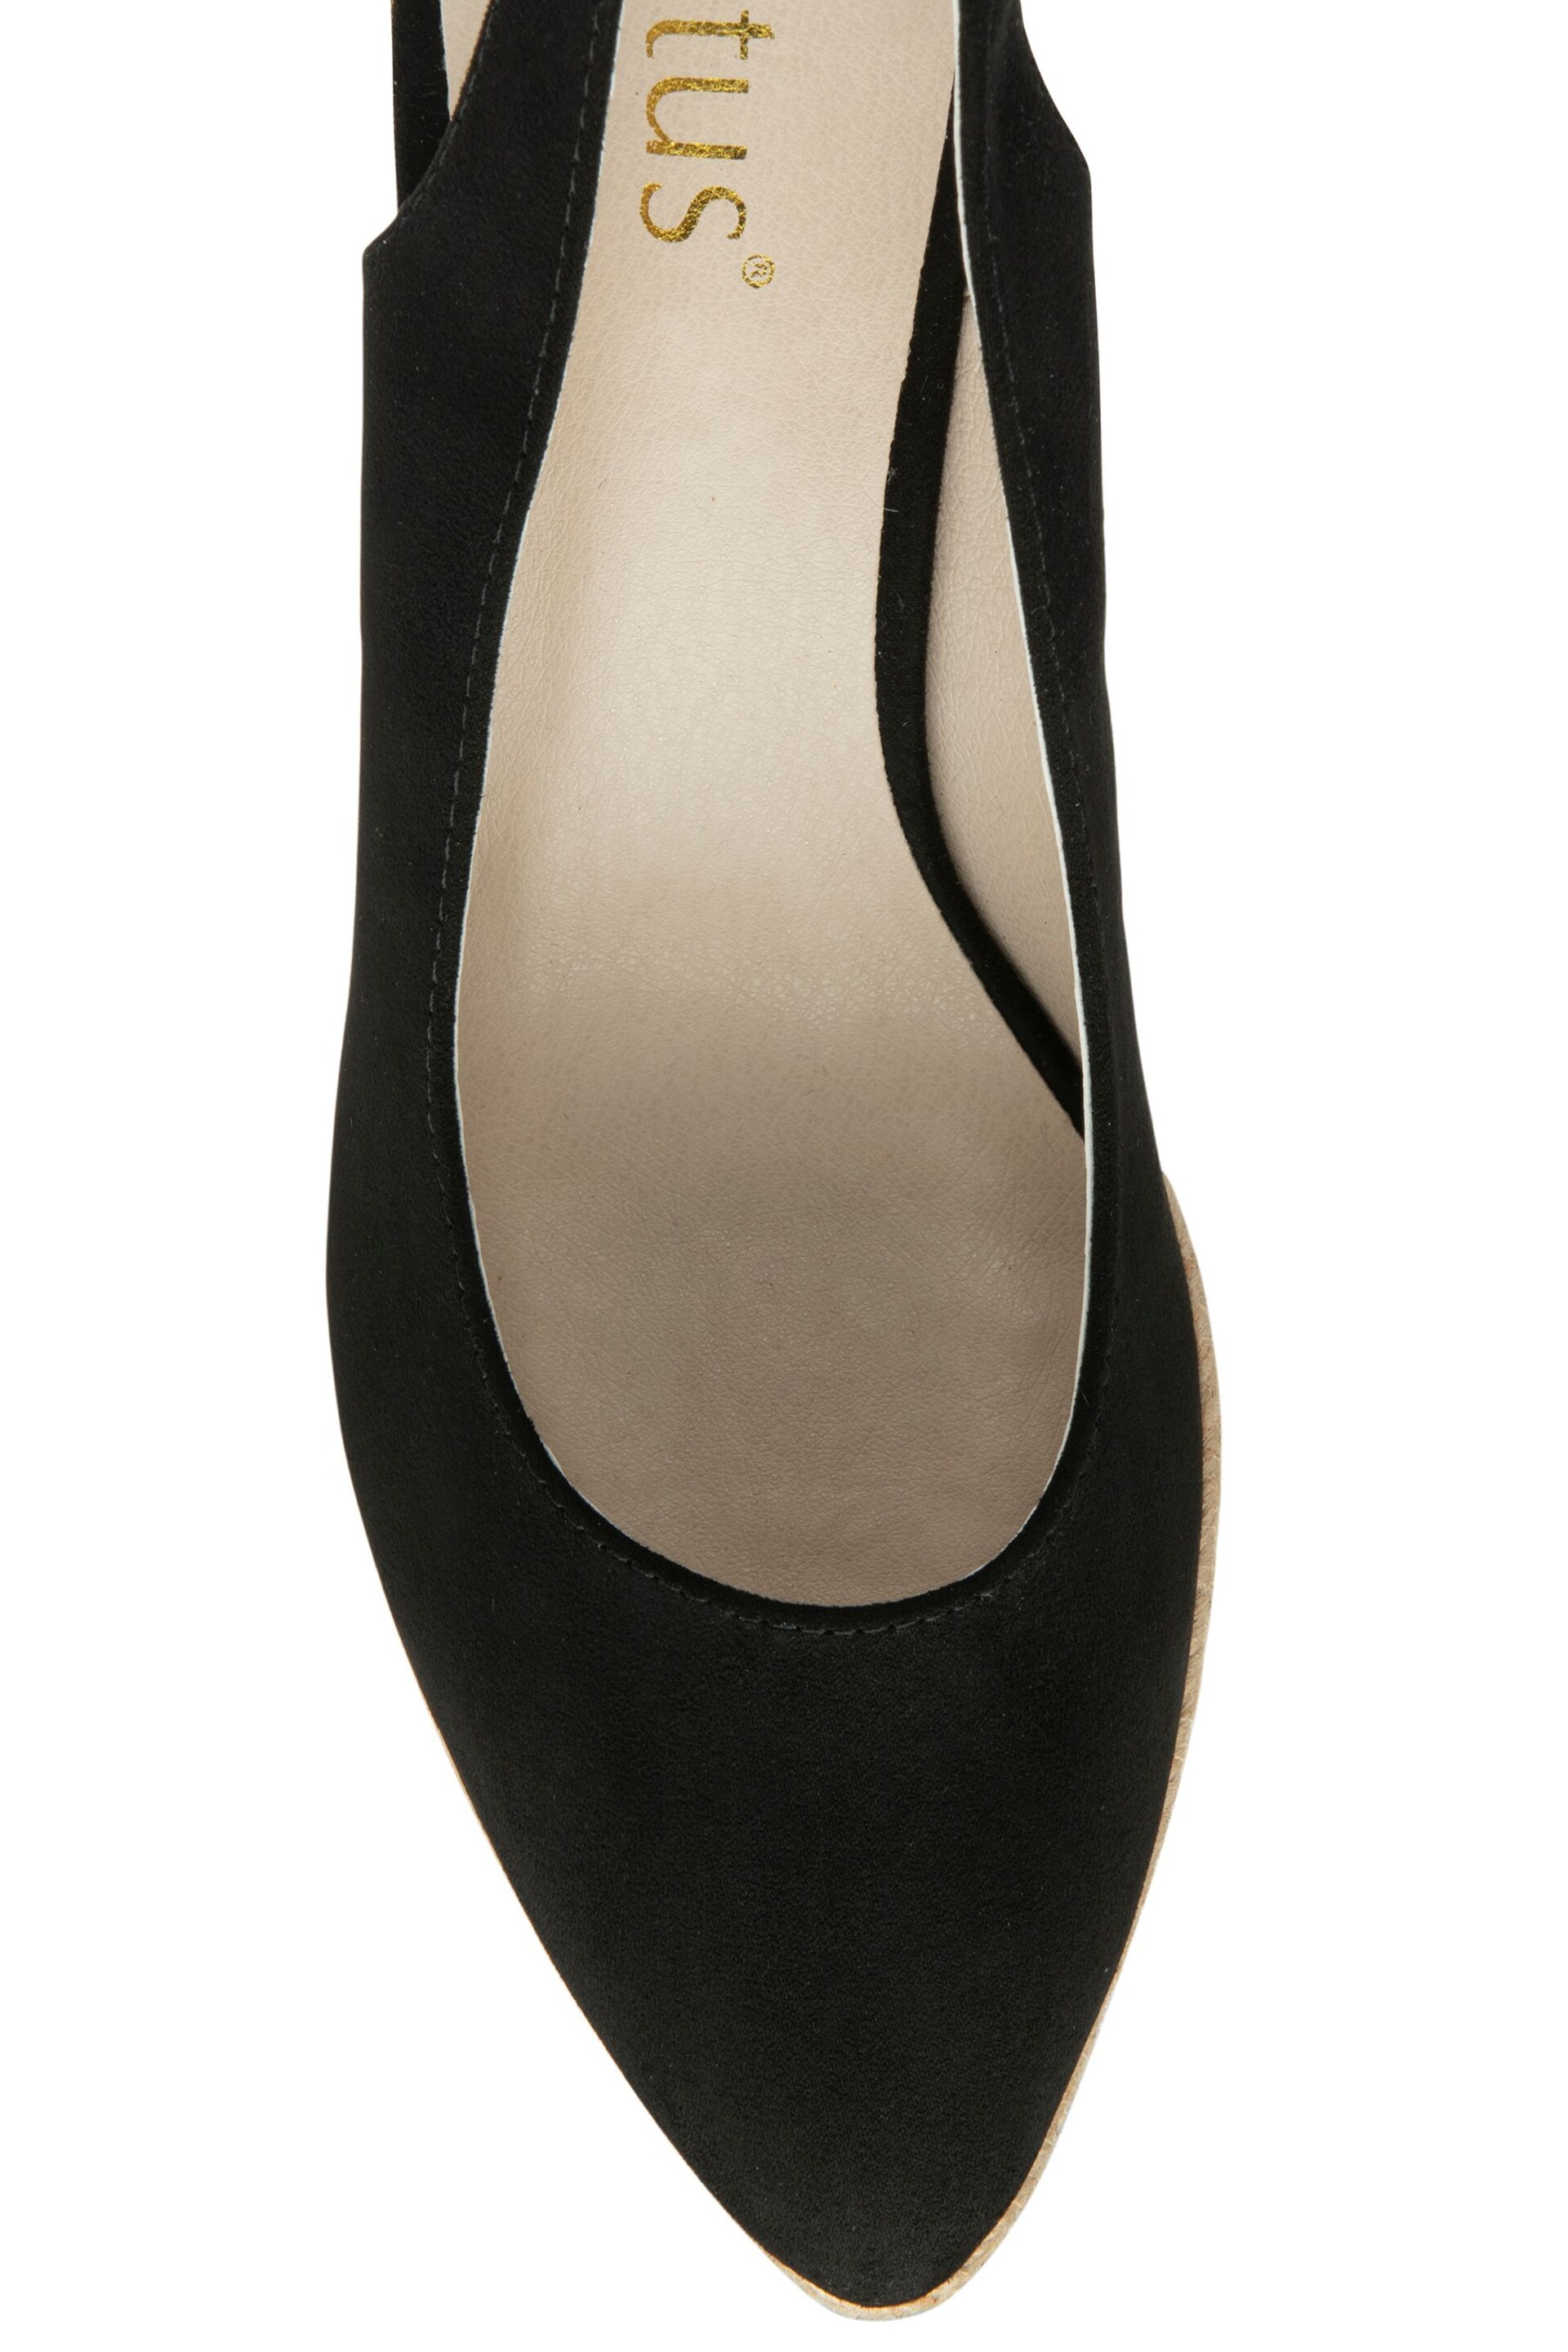 Lotus Black Sling Back Wedge Espadrille Shoes - Image 4 of 4